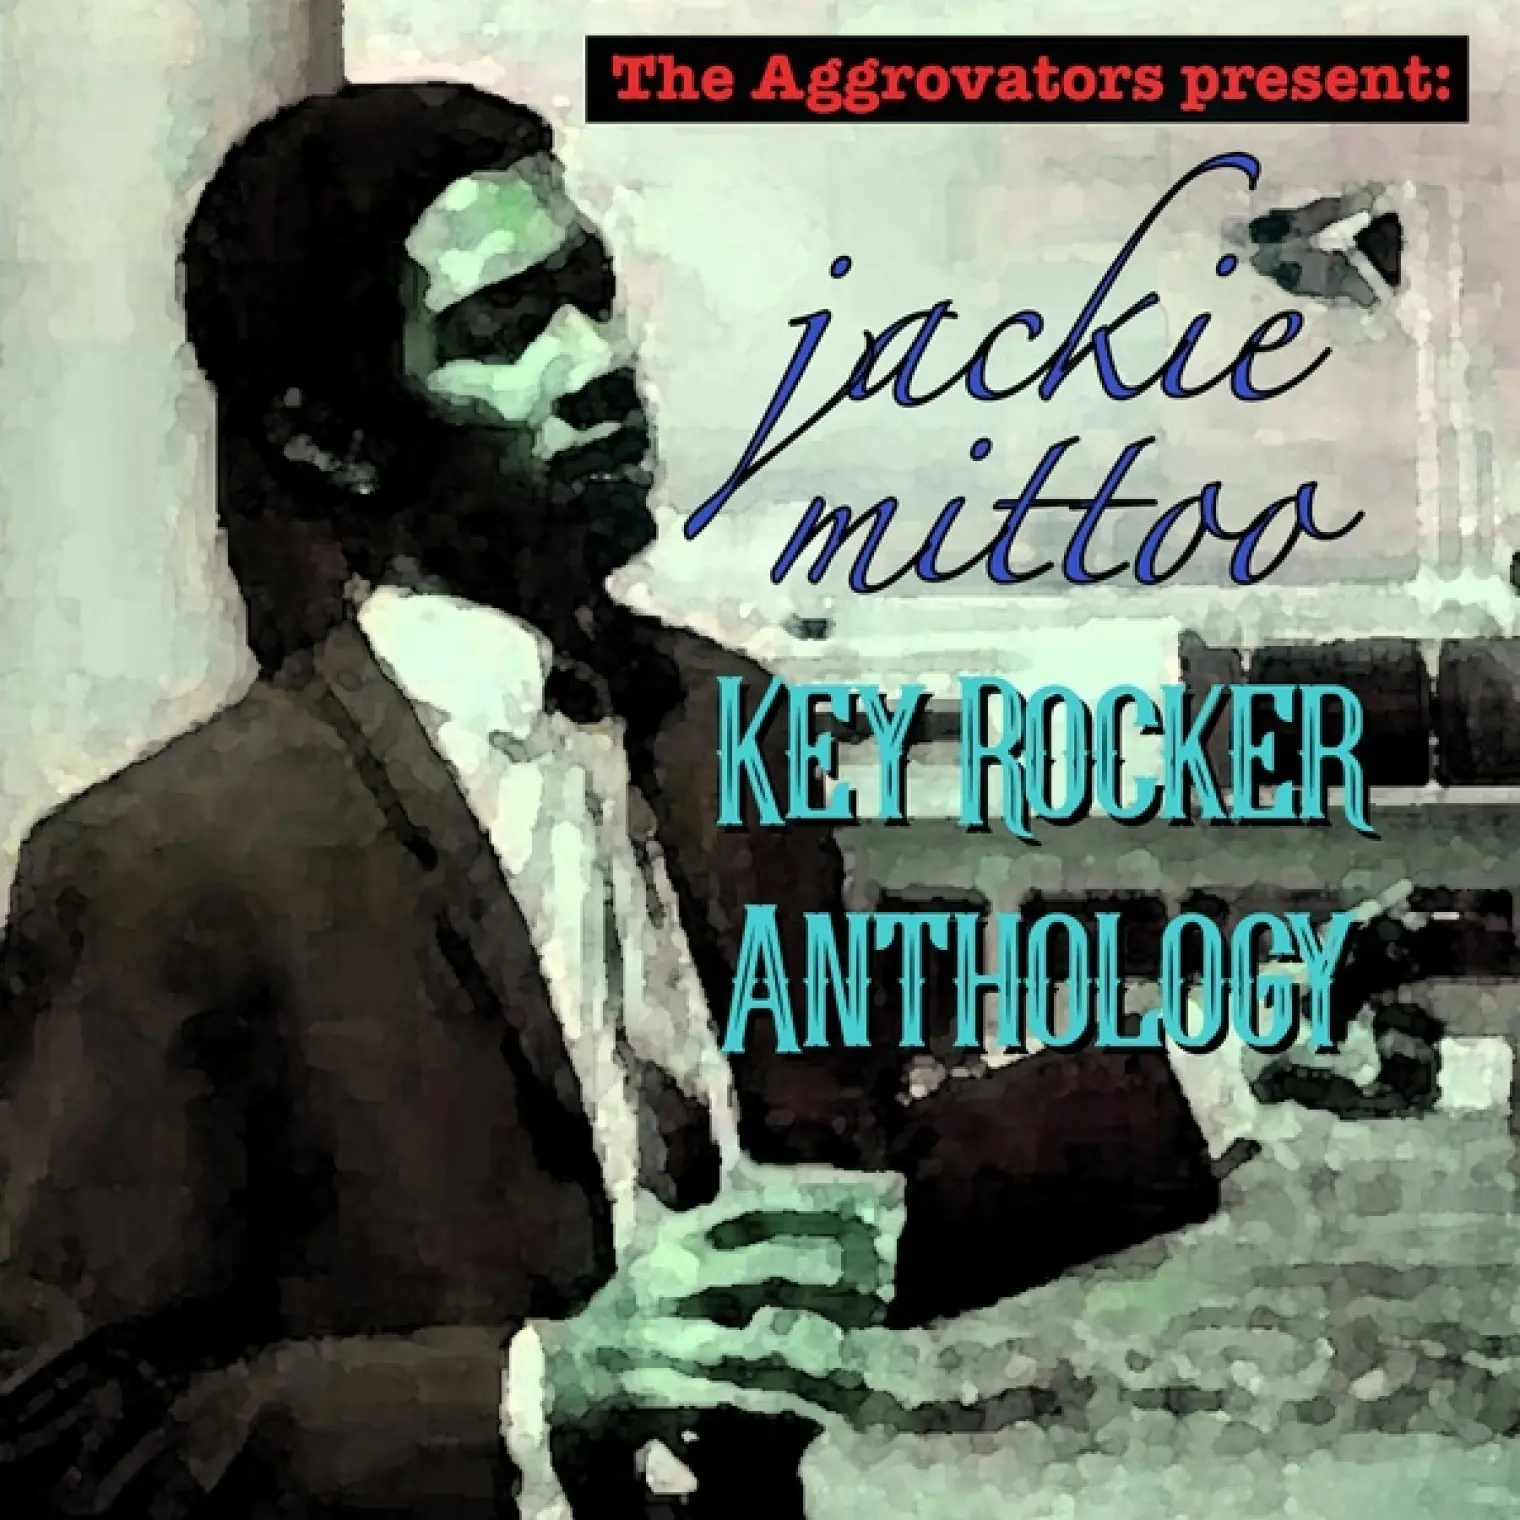 Key Rocker Anthology -  Jackie Mittoo 